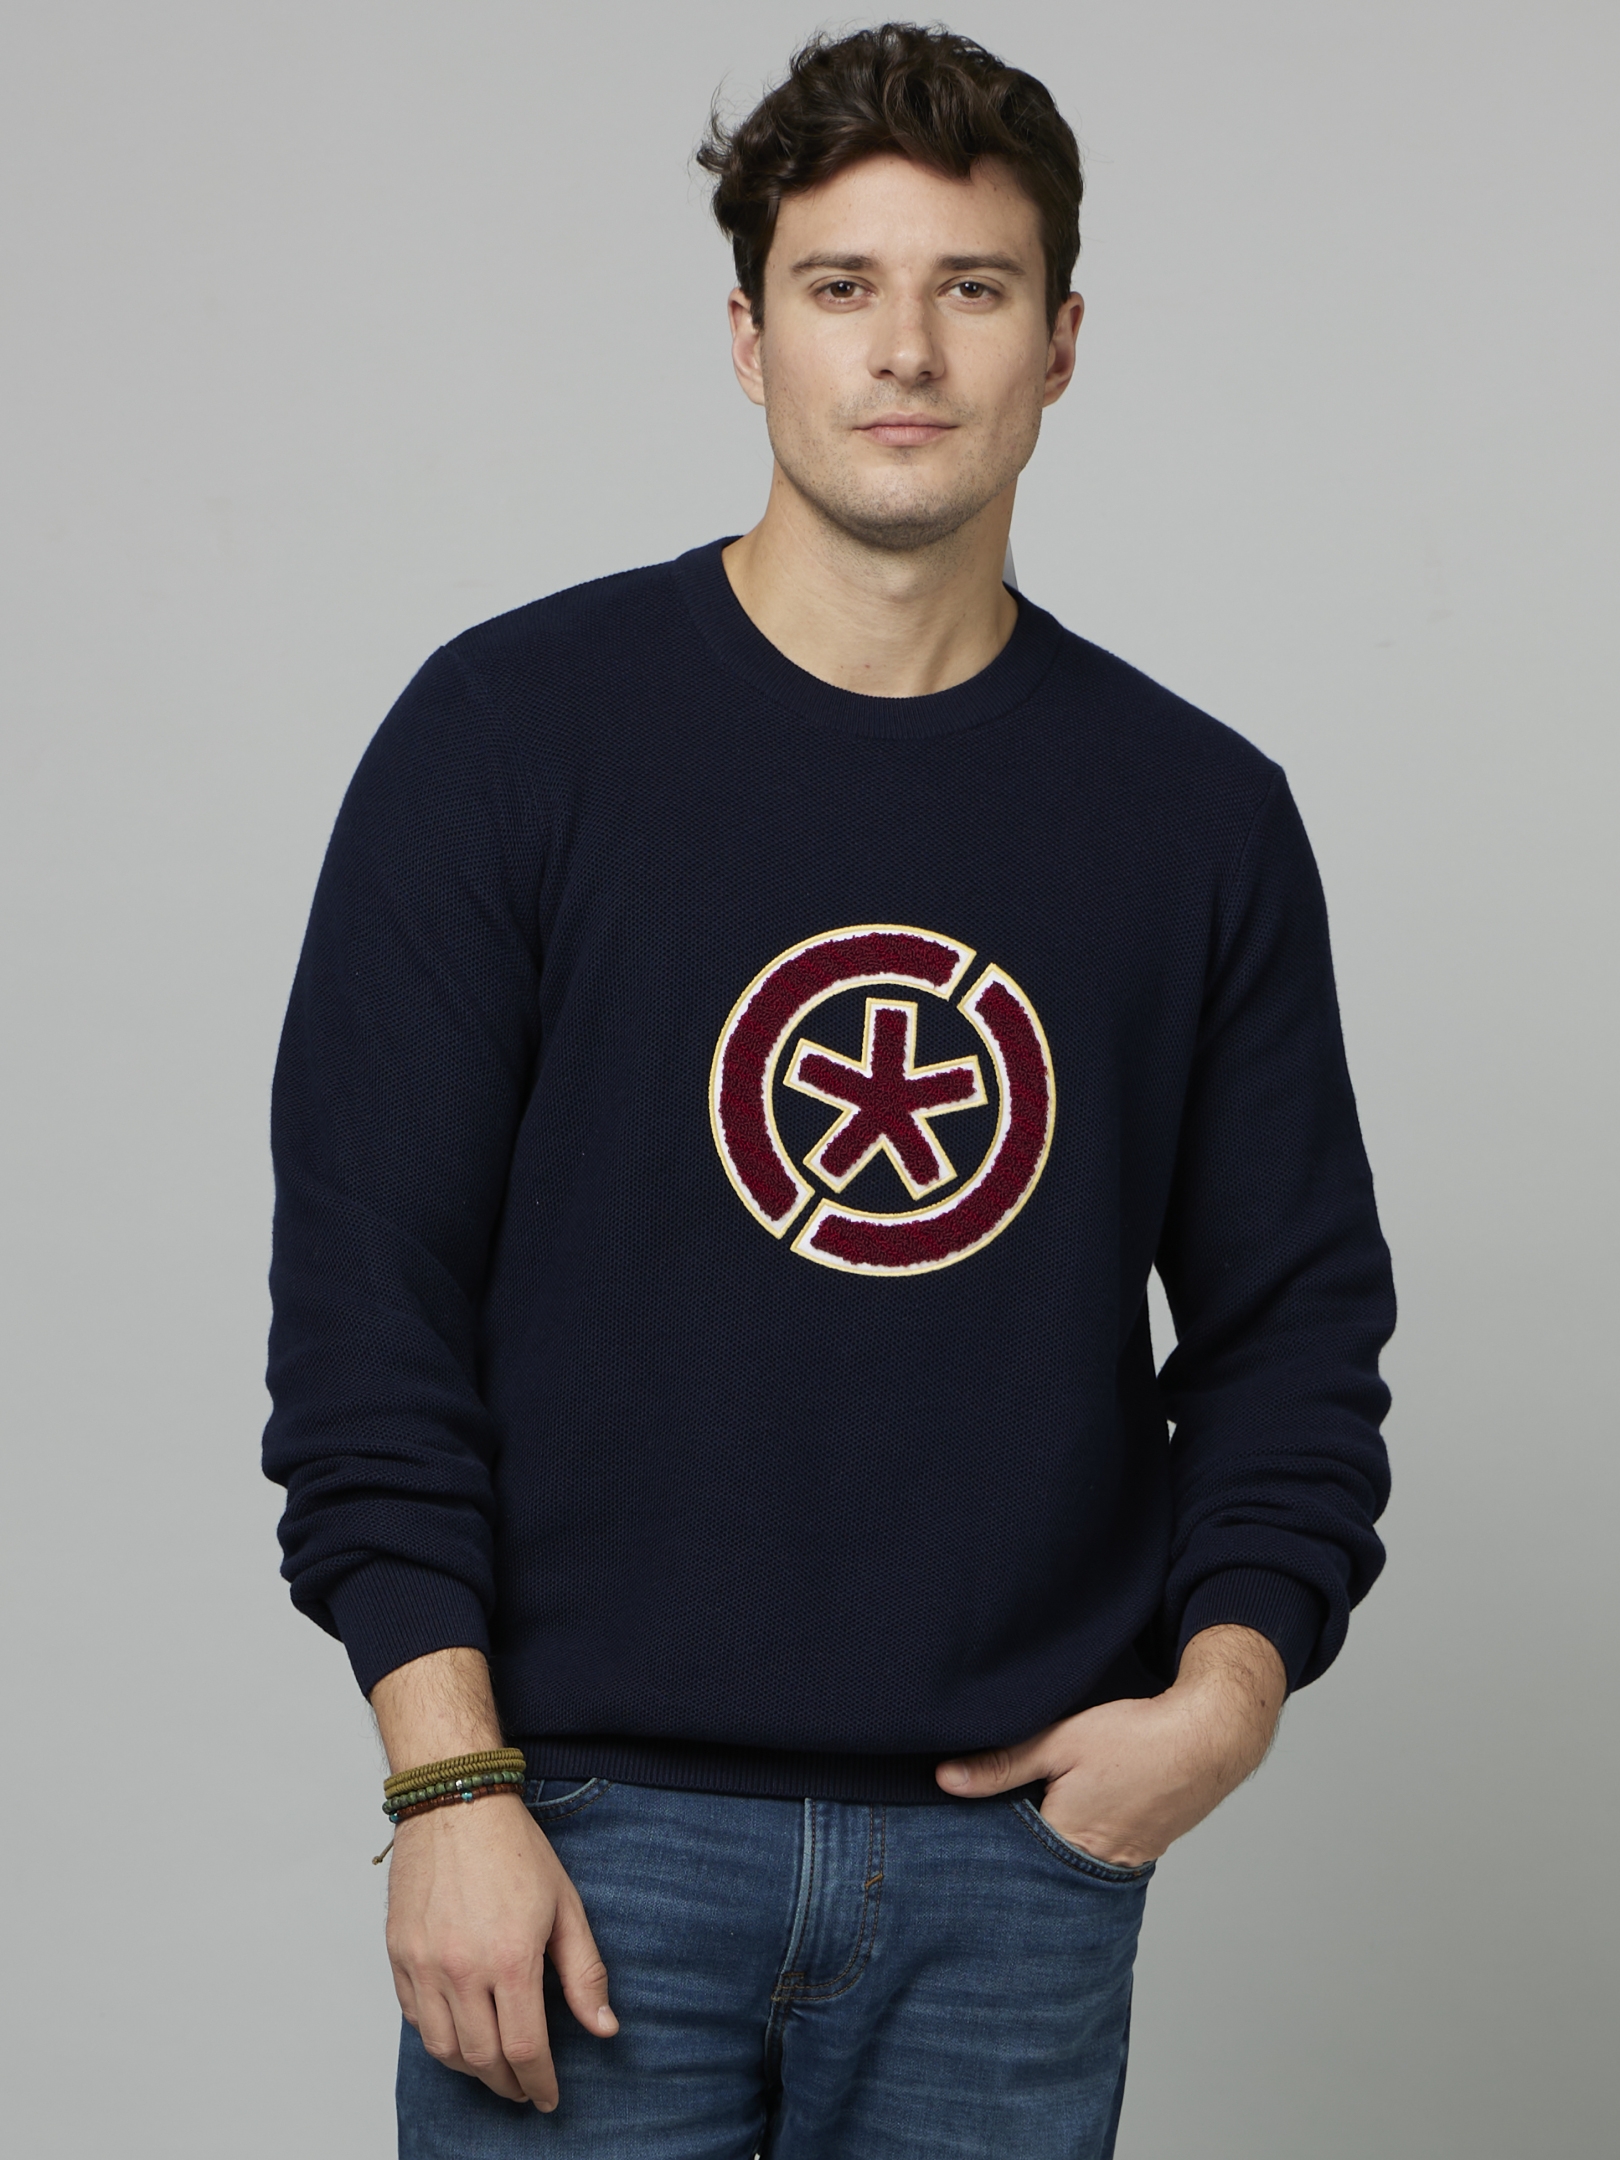 Men's Blue Graphics Sweaters